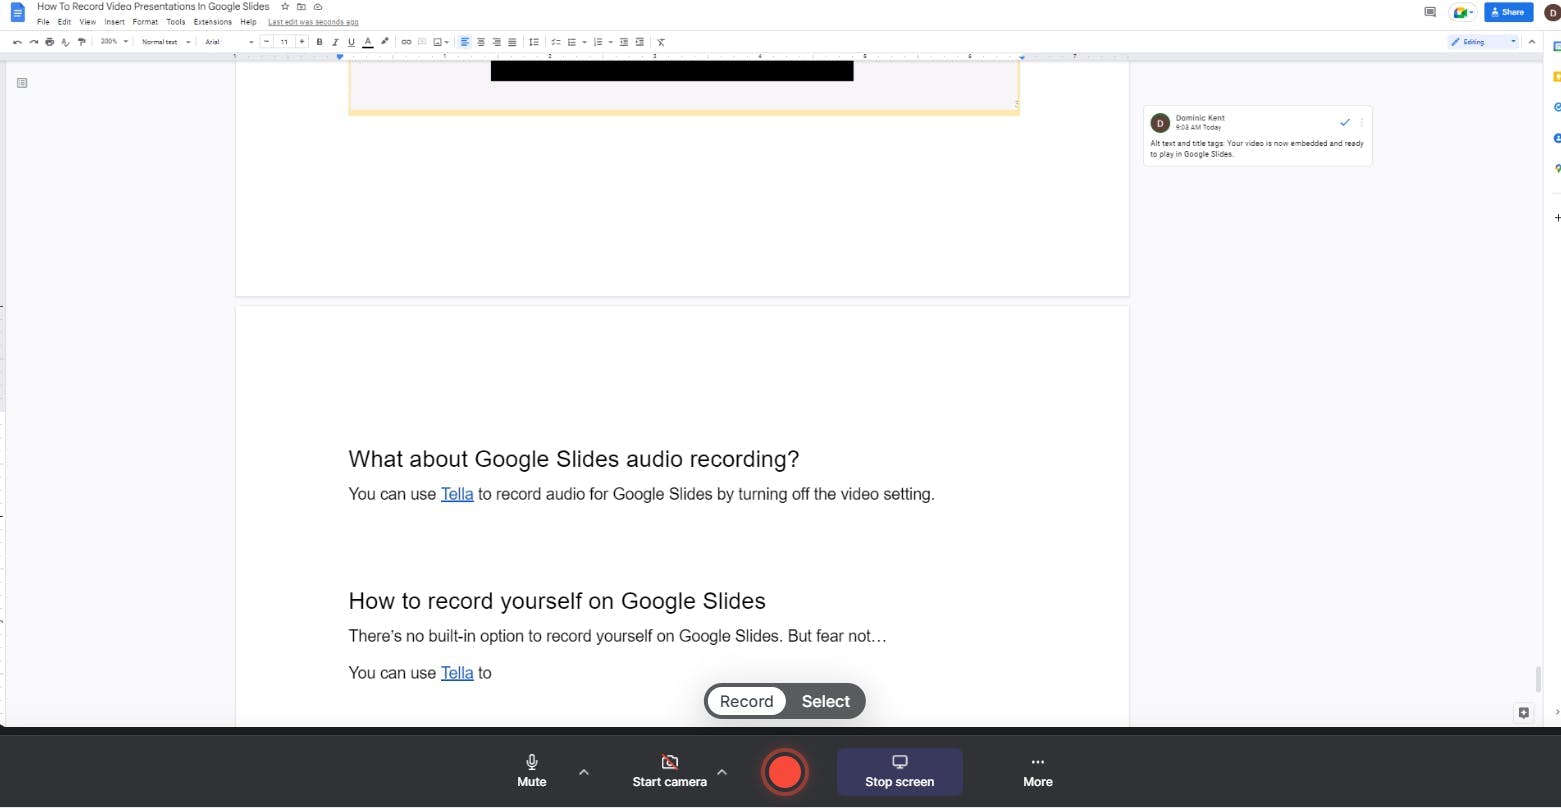 Recording audio for Google Slides